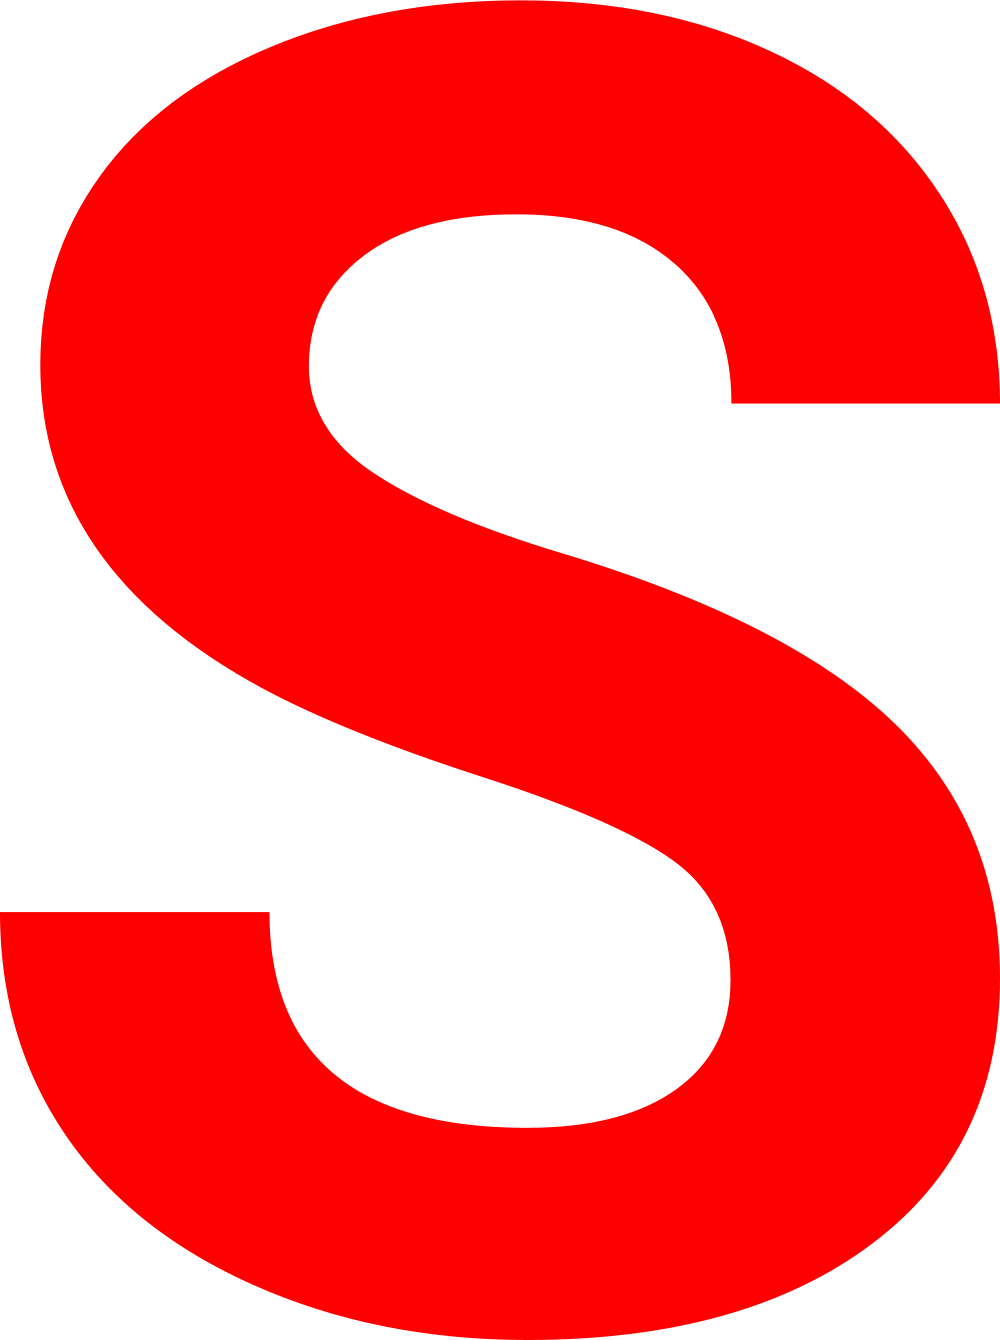 Red capital letter shape